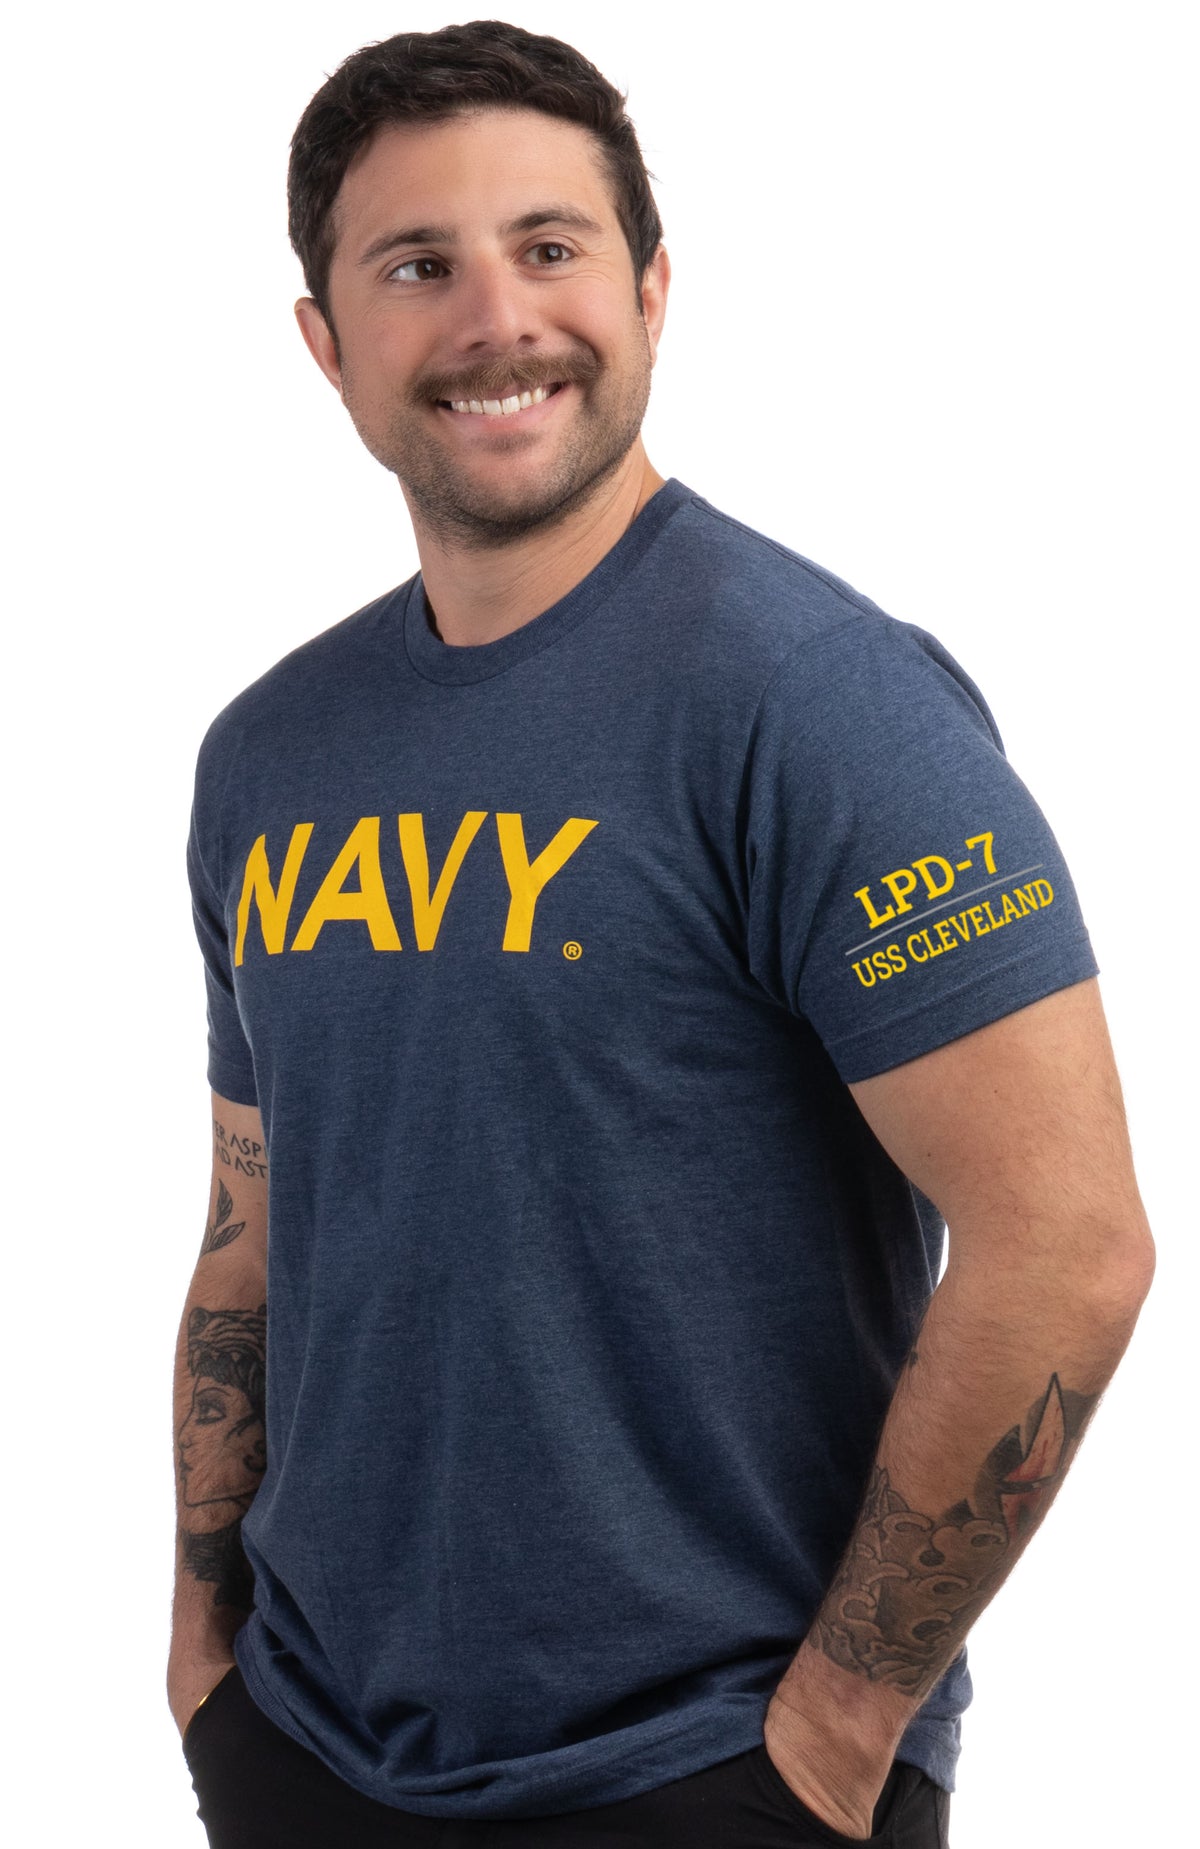 USS Cleveland, LPD-7 | U.S. Navy Sailor Veteran USN United States Naval T-shirt for Men Women